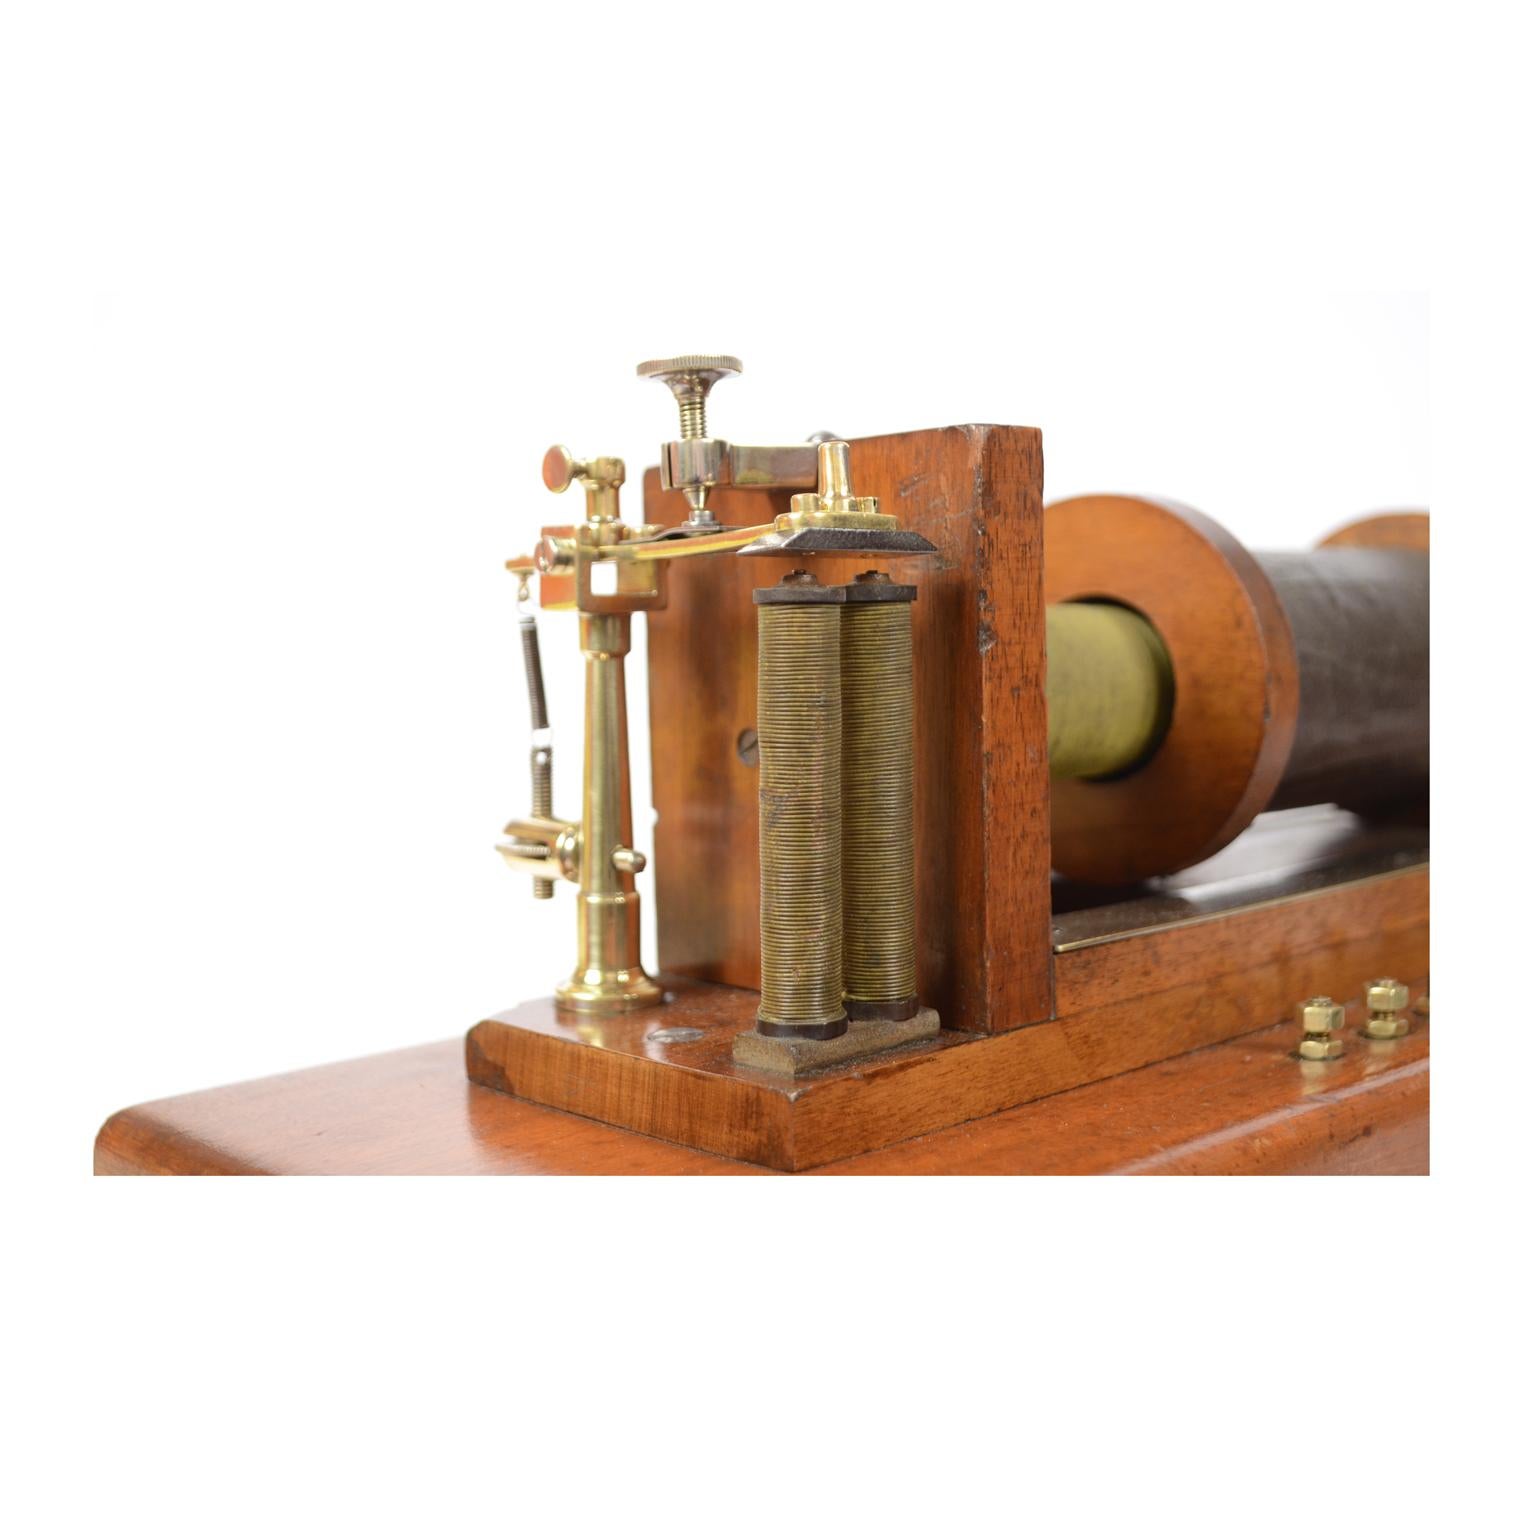 Induction Coil or Sled Antique Scientific Instrument by Du Bois Reymond 1870  For Sale 6